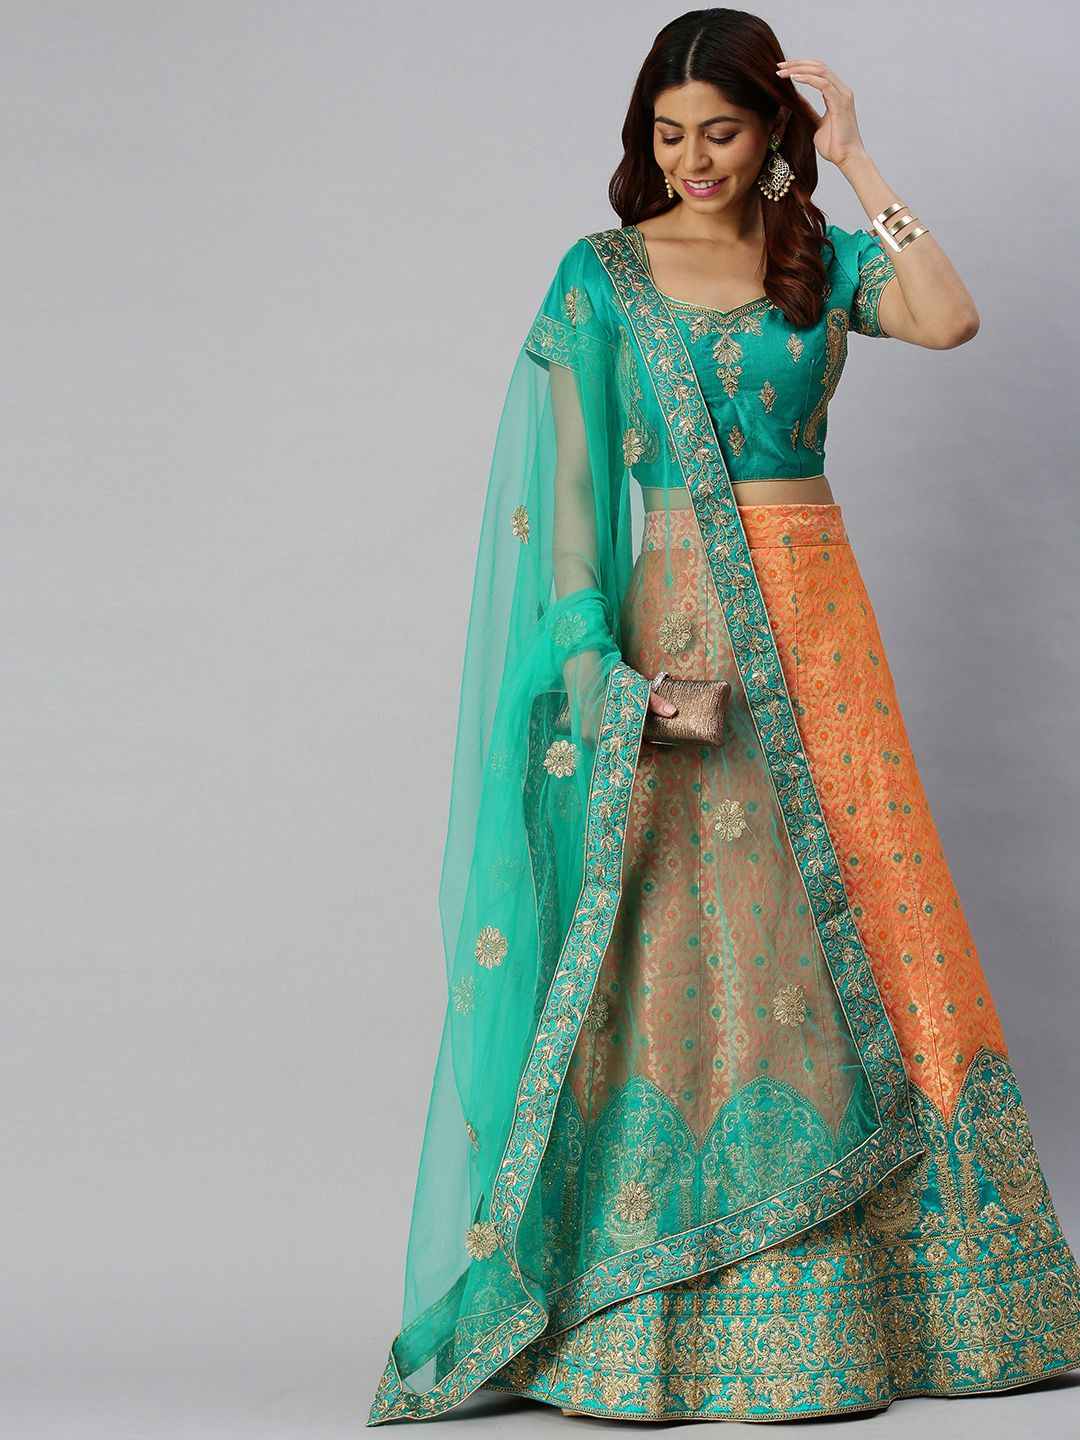 Mitera Teal Green & Orange Semi-Stitched Lehenga & Unstitched Blouse with Dupatta Price in India